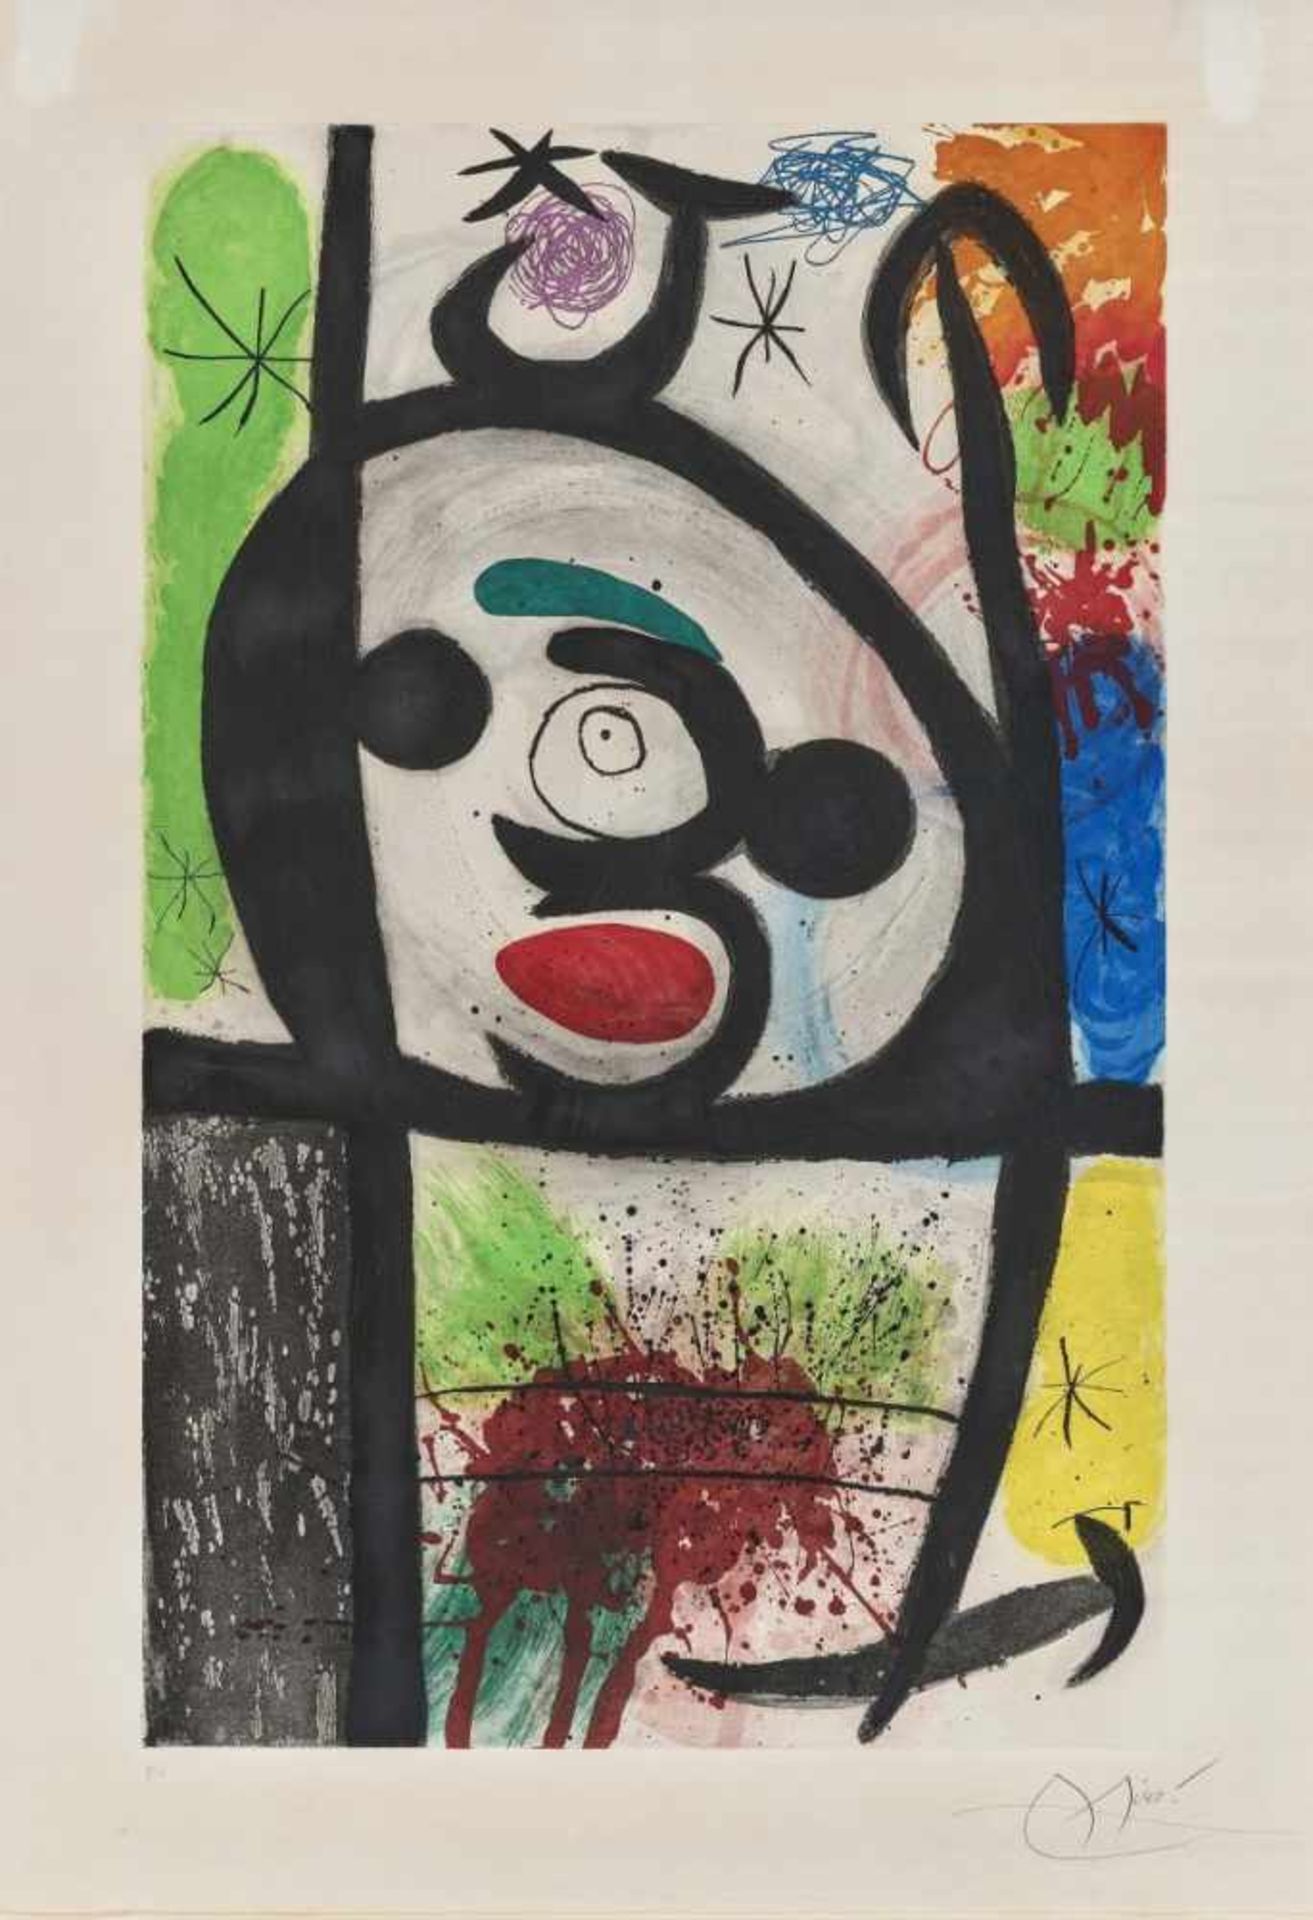 Miró, Joan1893 Barcelona - 1983 Palma de MallorcaLa Femme Toupie. 1974 Farbige Aquatintaradierung